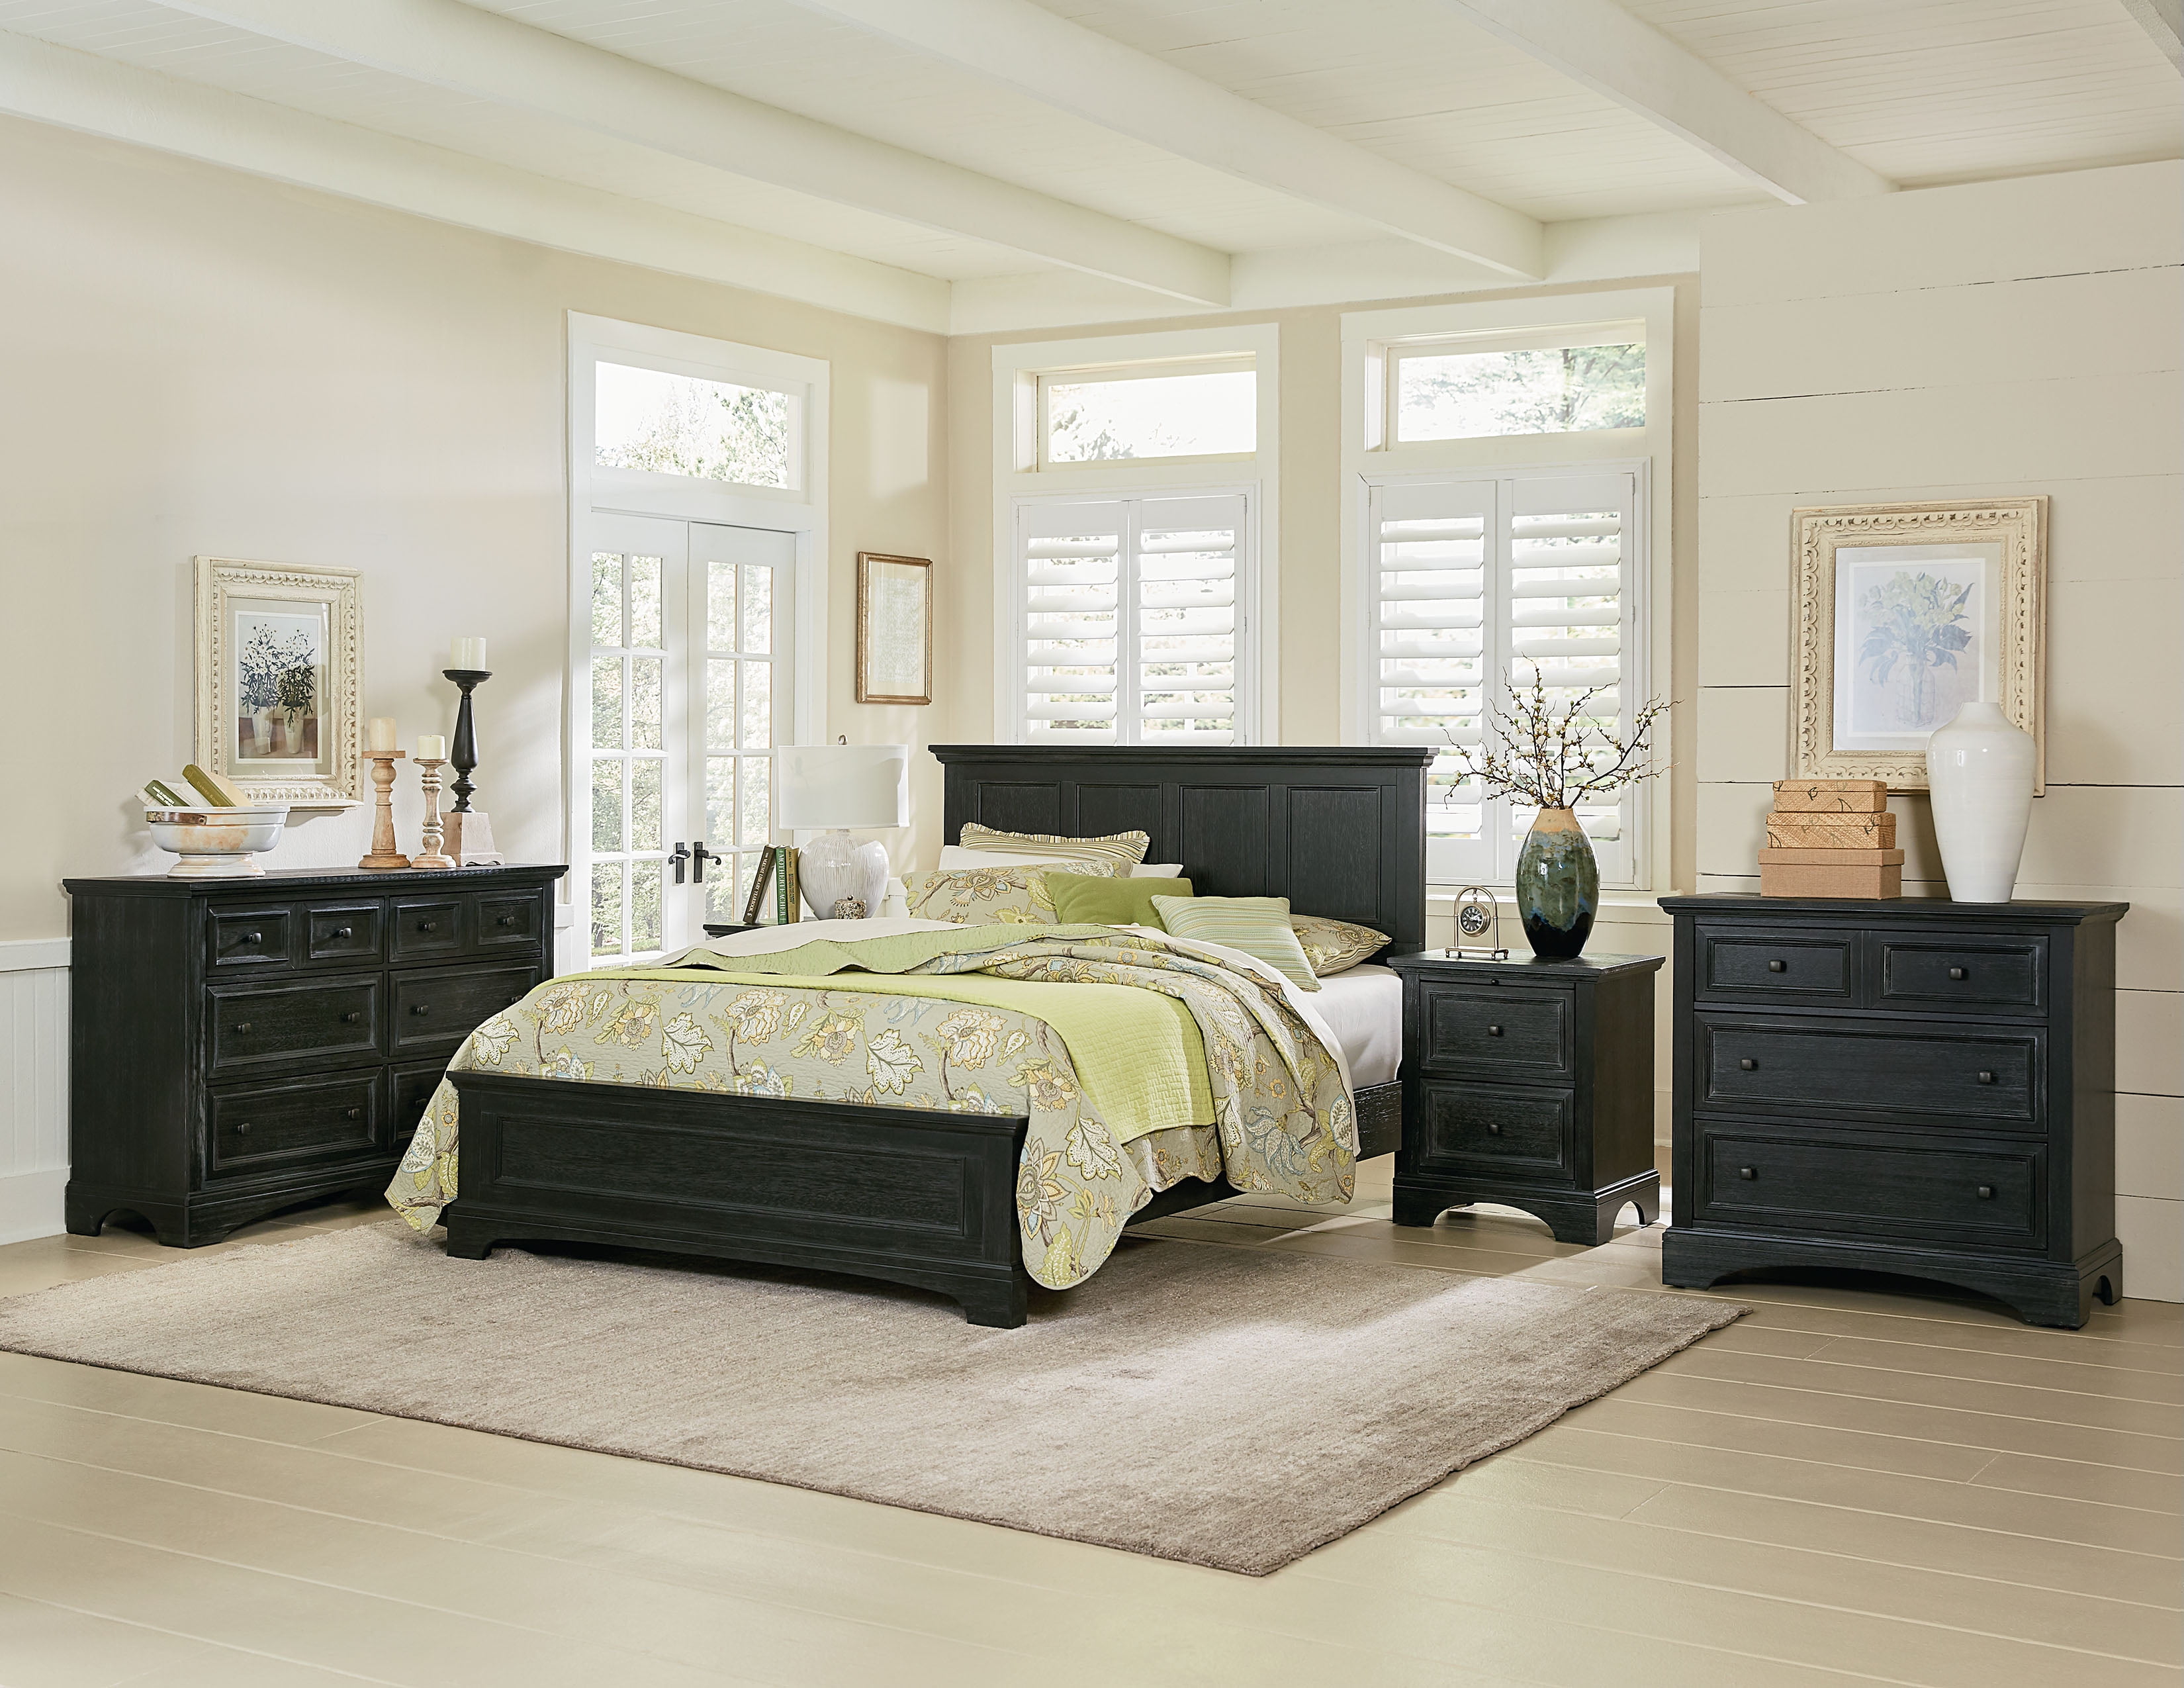 Farmhouse Basics King Bedroom Set with 2 Nightstands and 1 Dresser - Walmart.com - Walmart.com